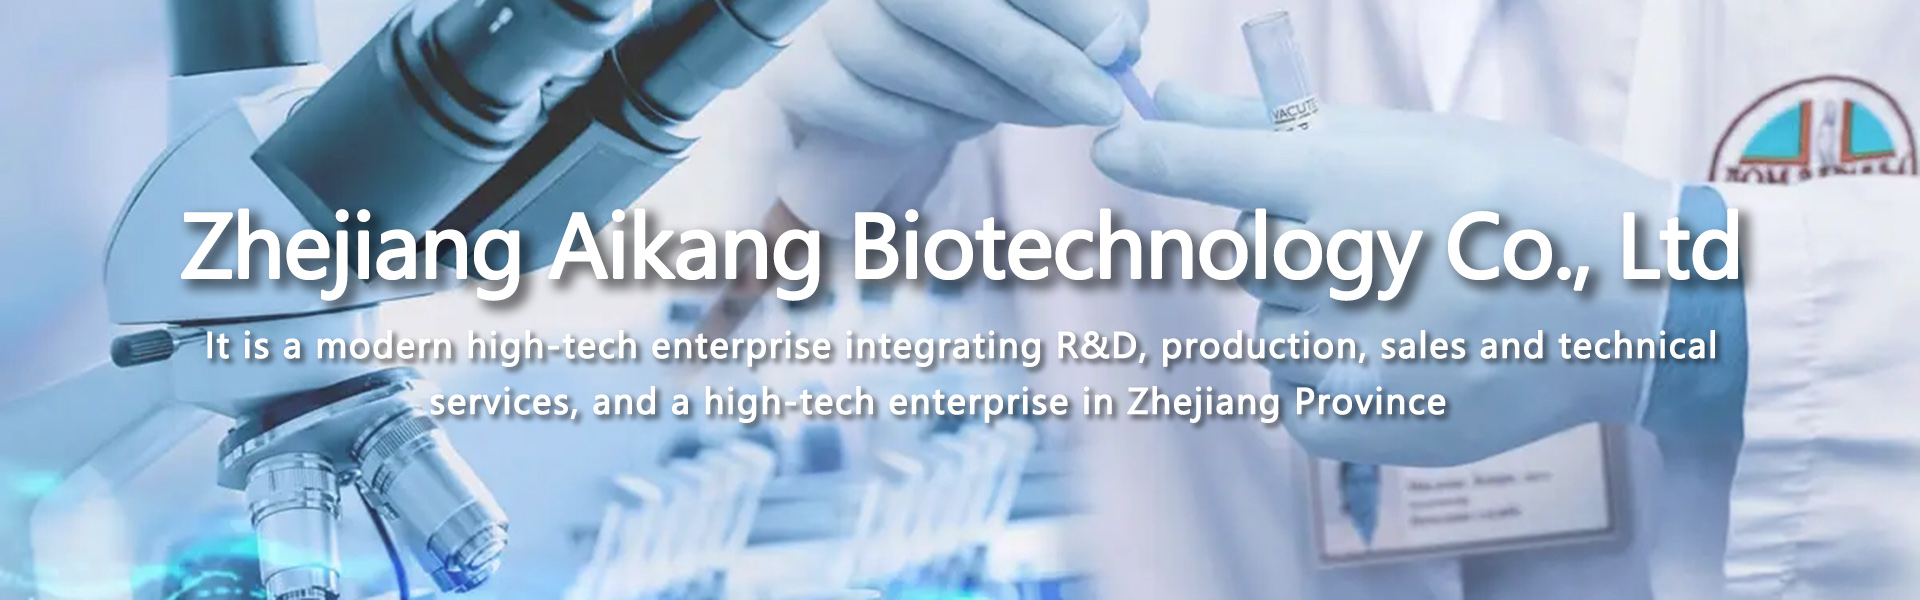 Zhejiang Aikang Biotechnology Co., Ltd